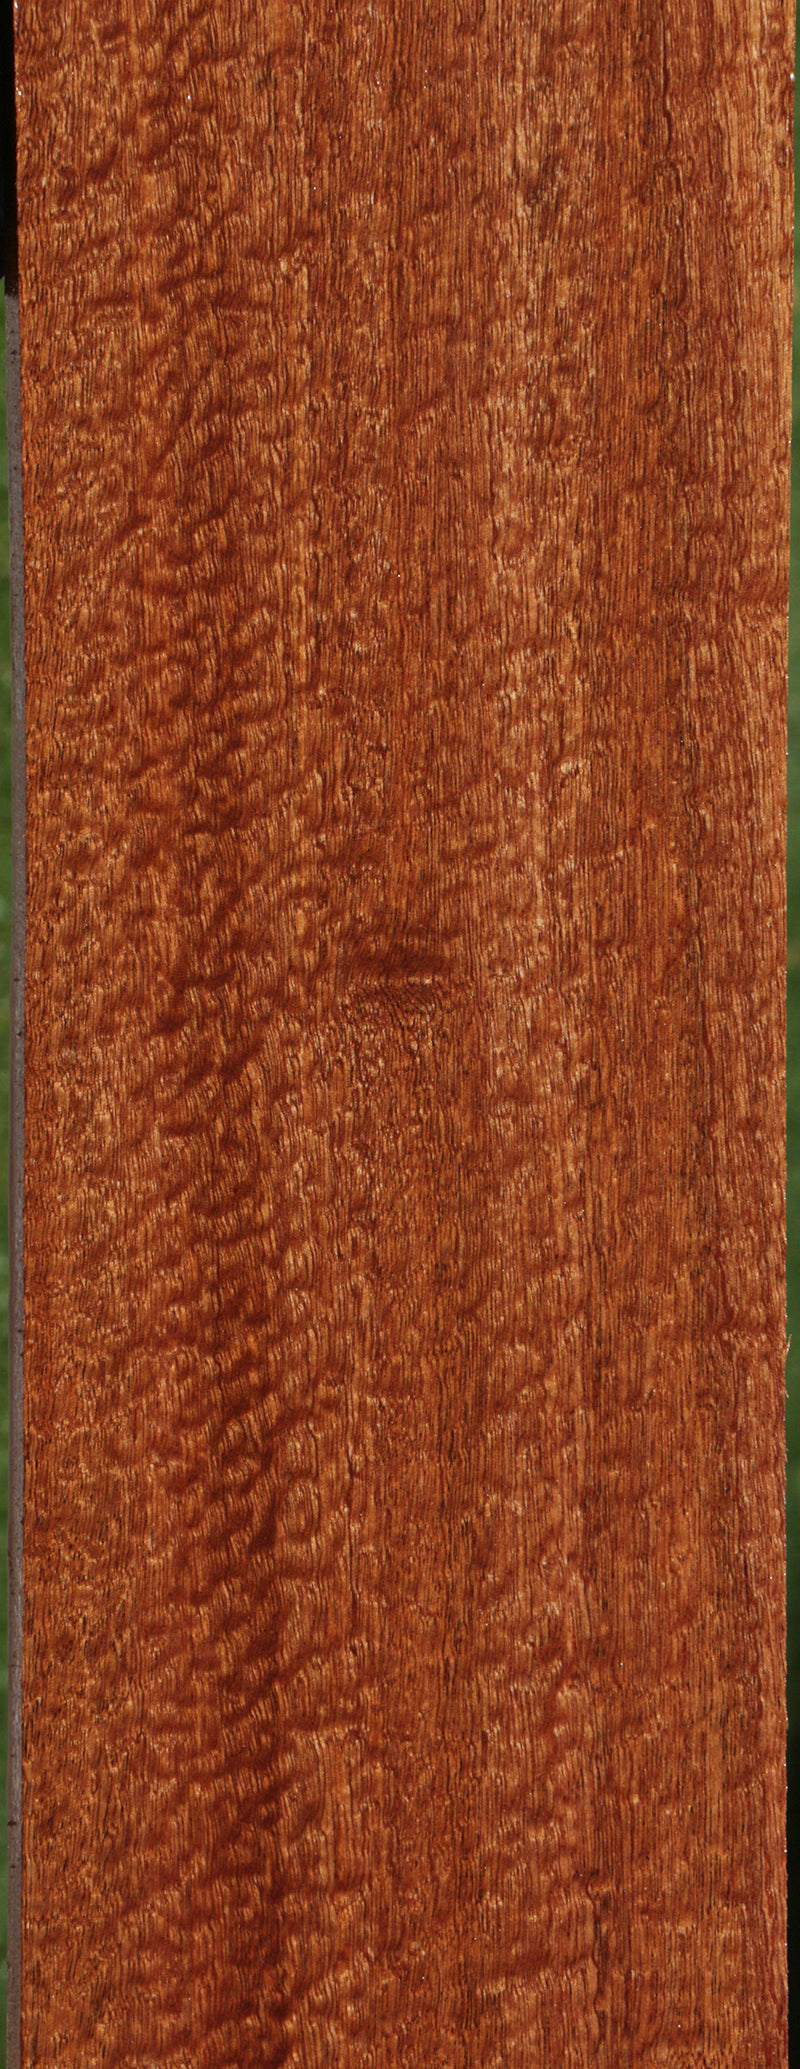 Exhibition Pomelle Sapele Lumber